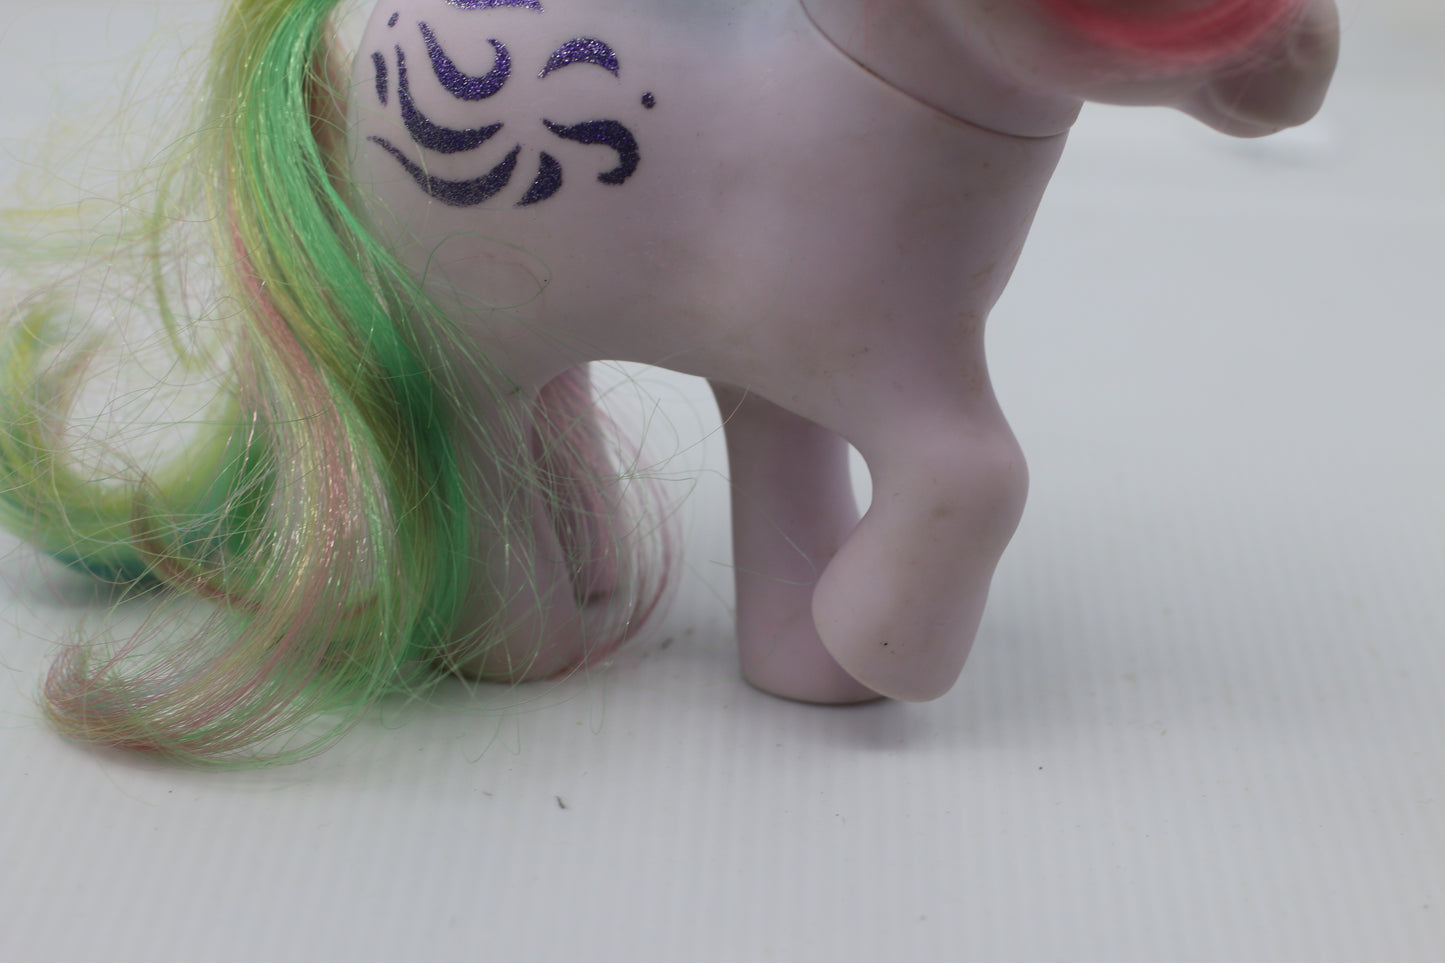 My Little Pony Vintage Rainbow Unicorn Windy #3 glittery symbols G1